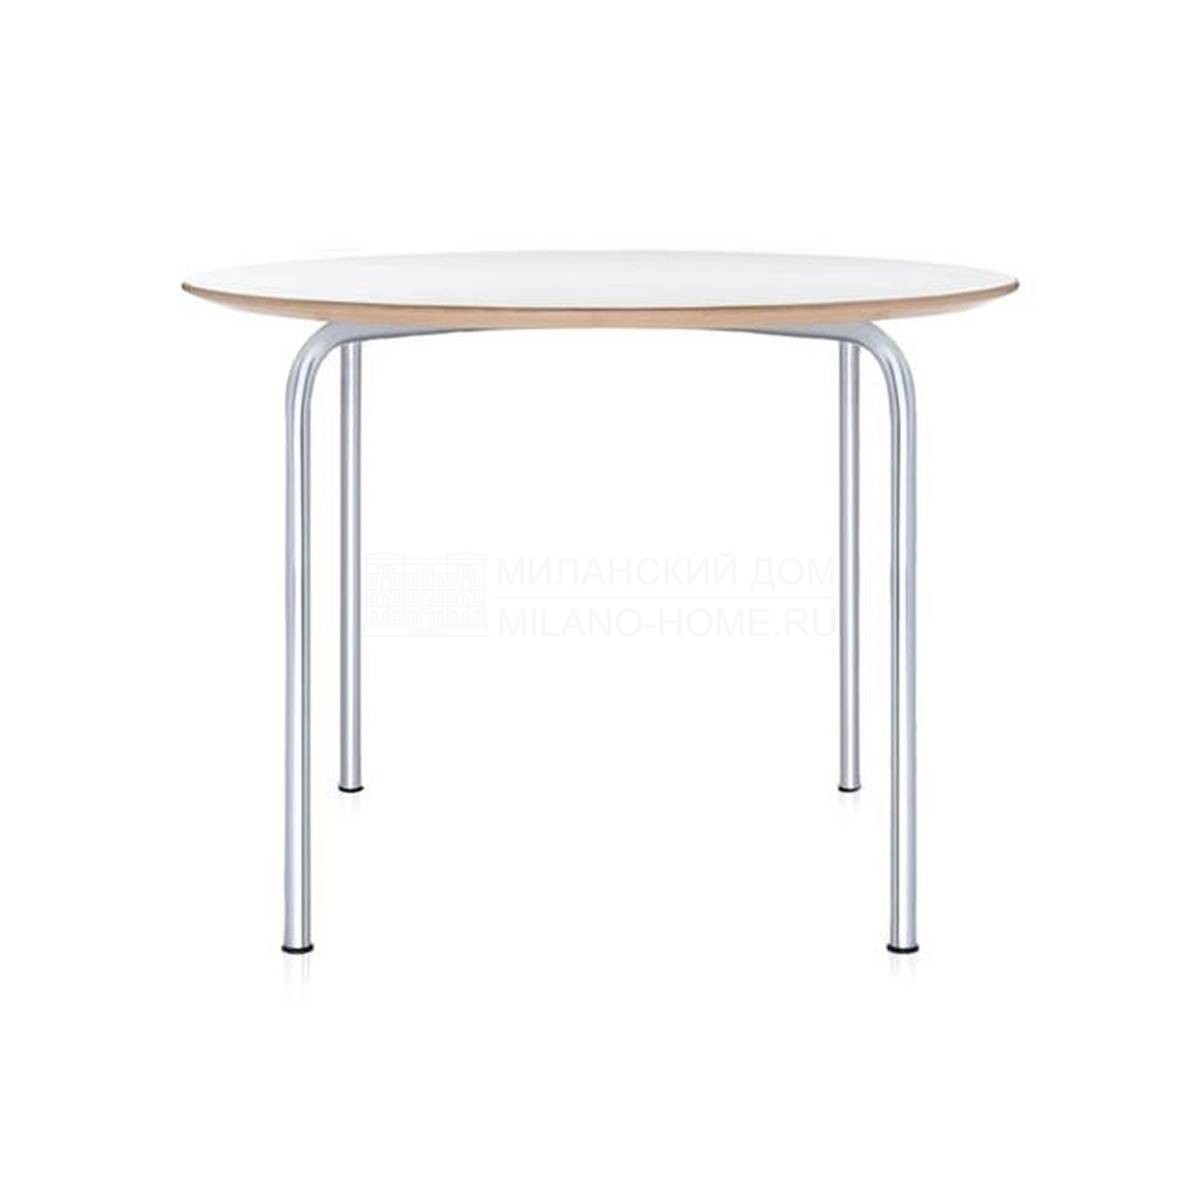 Круглый стол Maui round table из Италии фабрики KARTELL